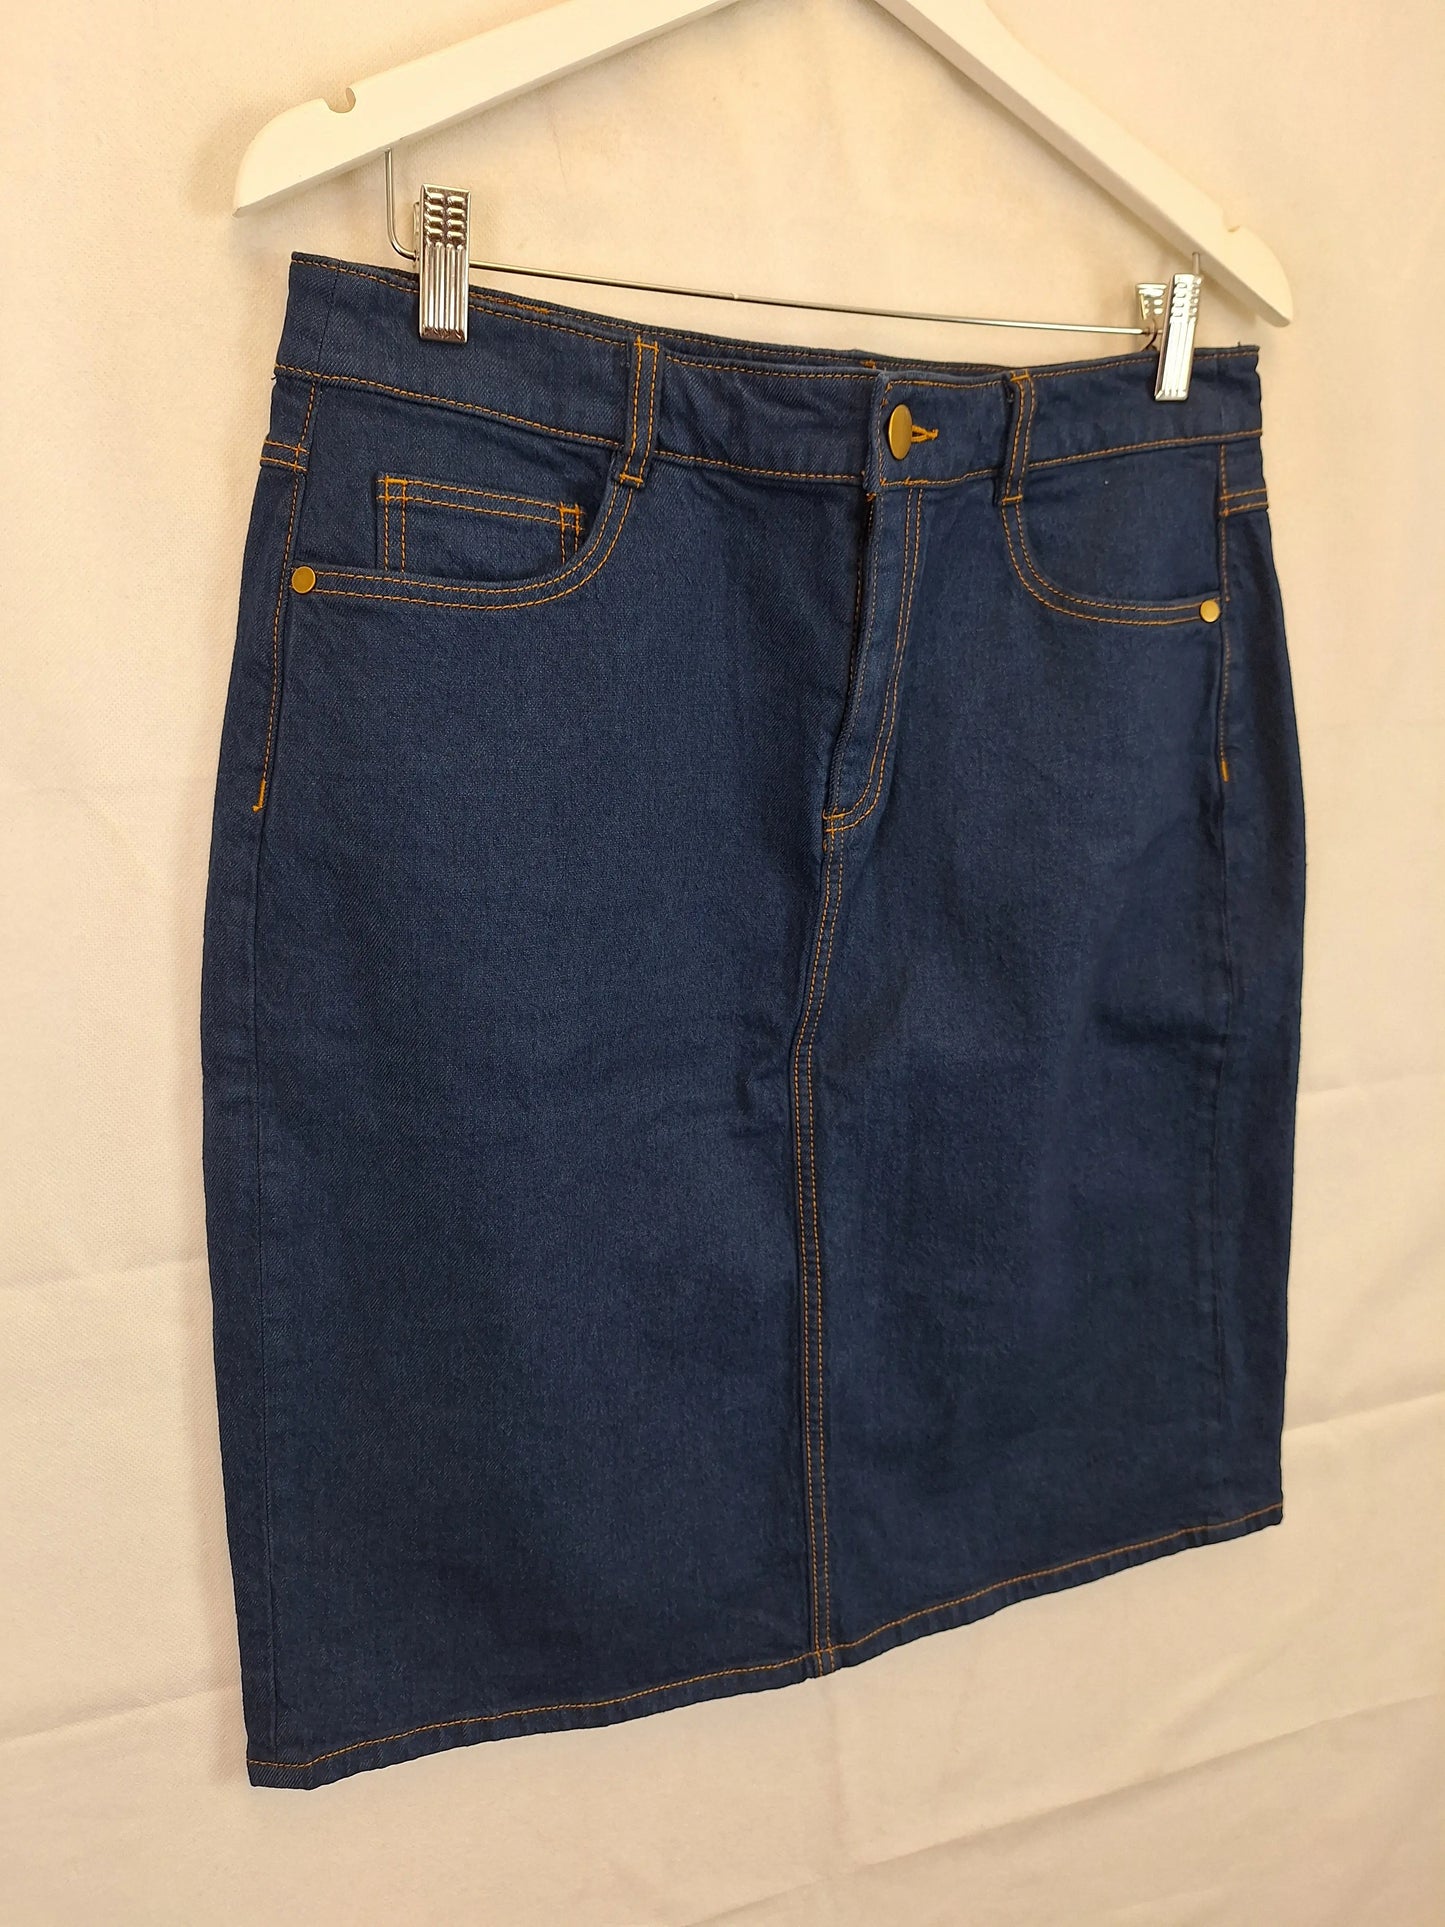 Sportscraft Mid Blue Denim Pencil Mini Skirt Size 12 by SwapUp-Online Second Hand Store-Online Thrift Store